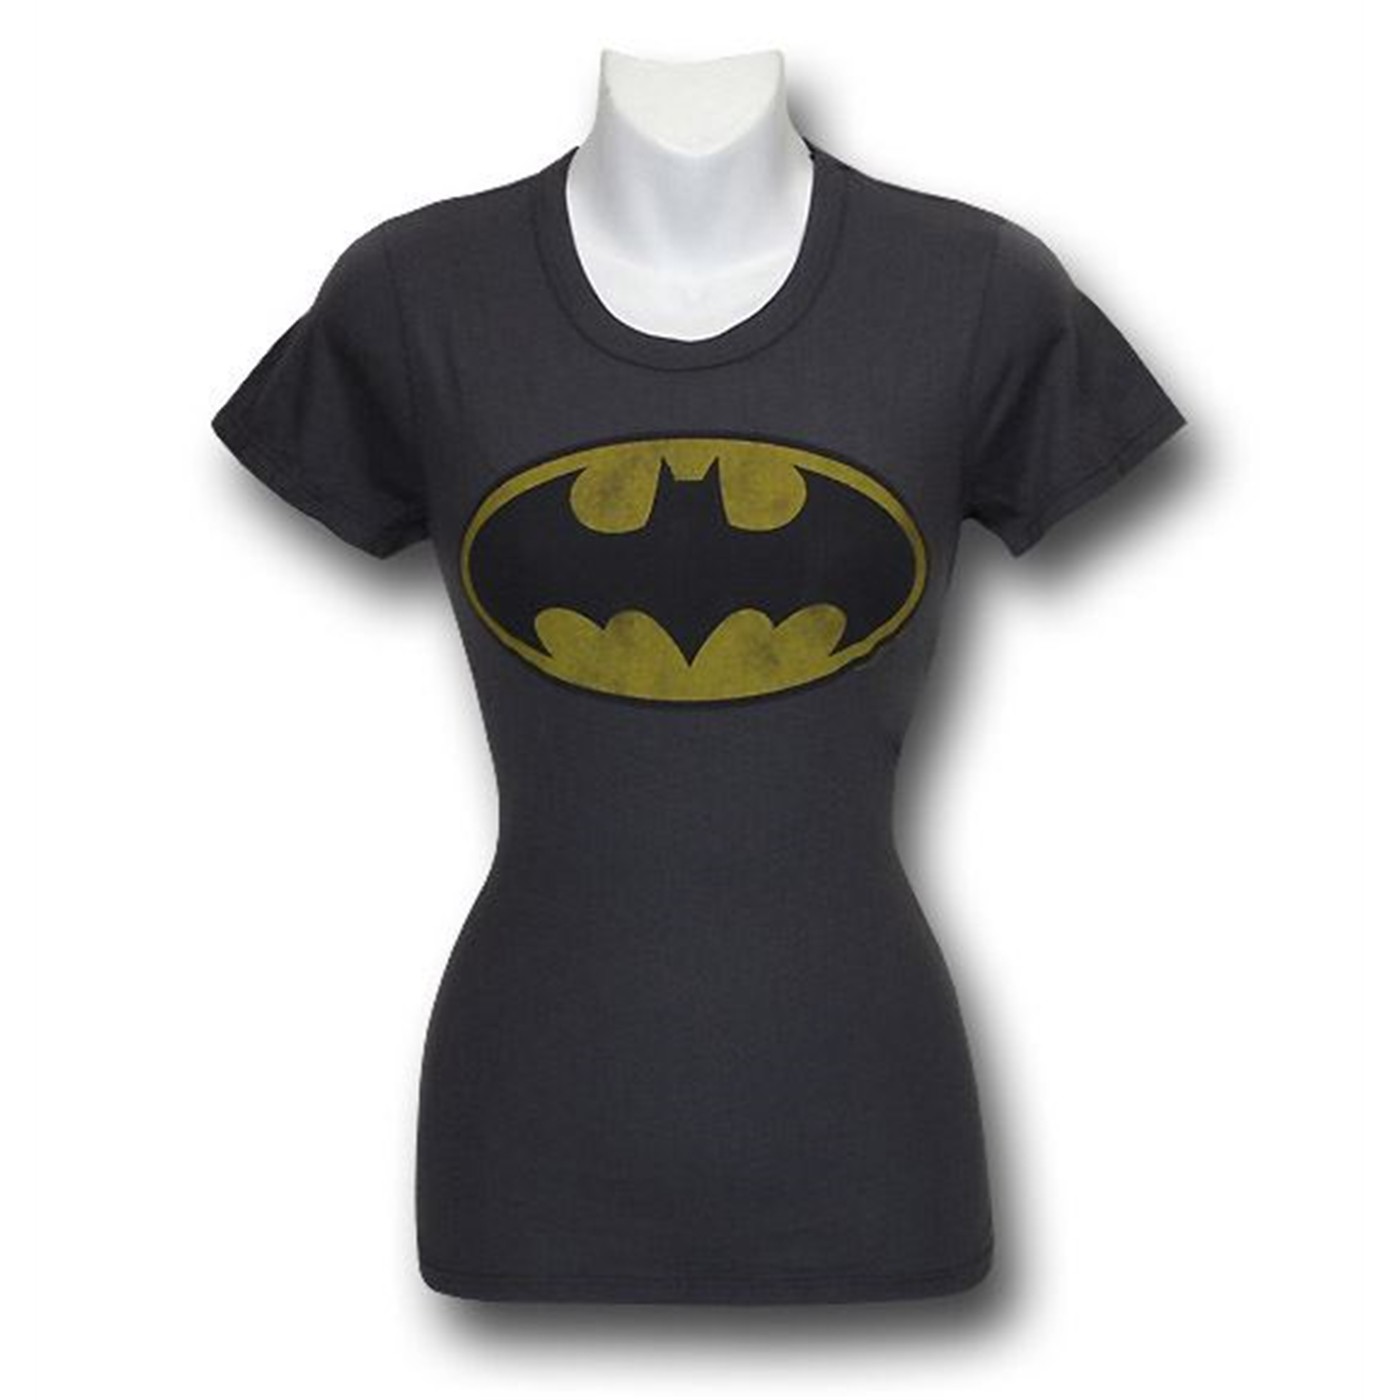 Batman Jrs Distressed Symbol Junk Food T-Shirt